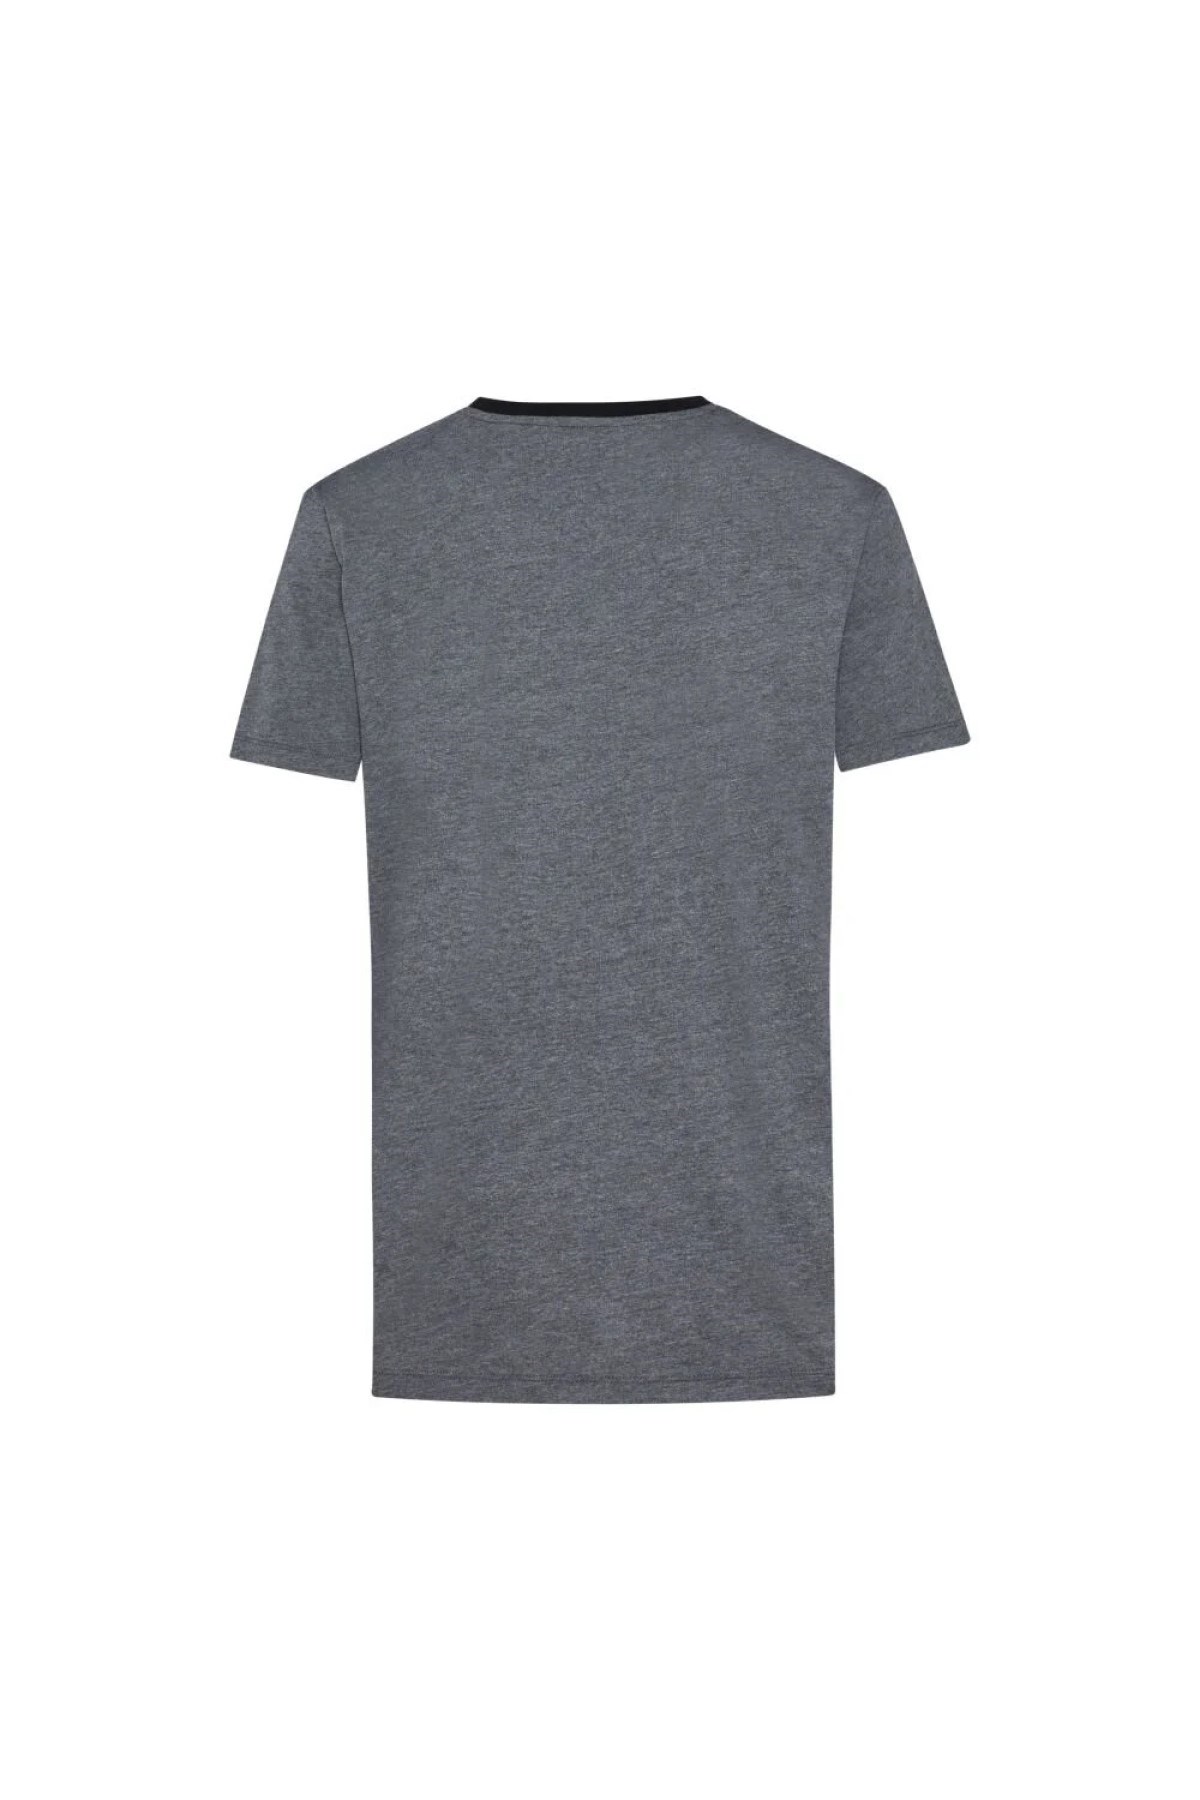 New Balance Erkek T-Shirt MNT1106-CHC Charcoal